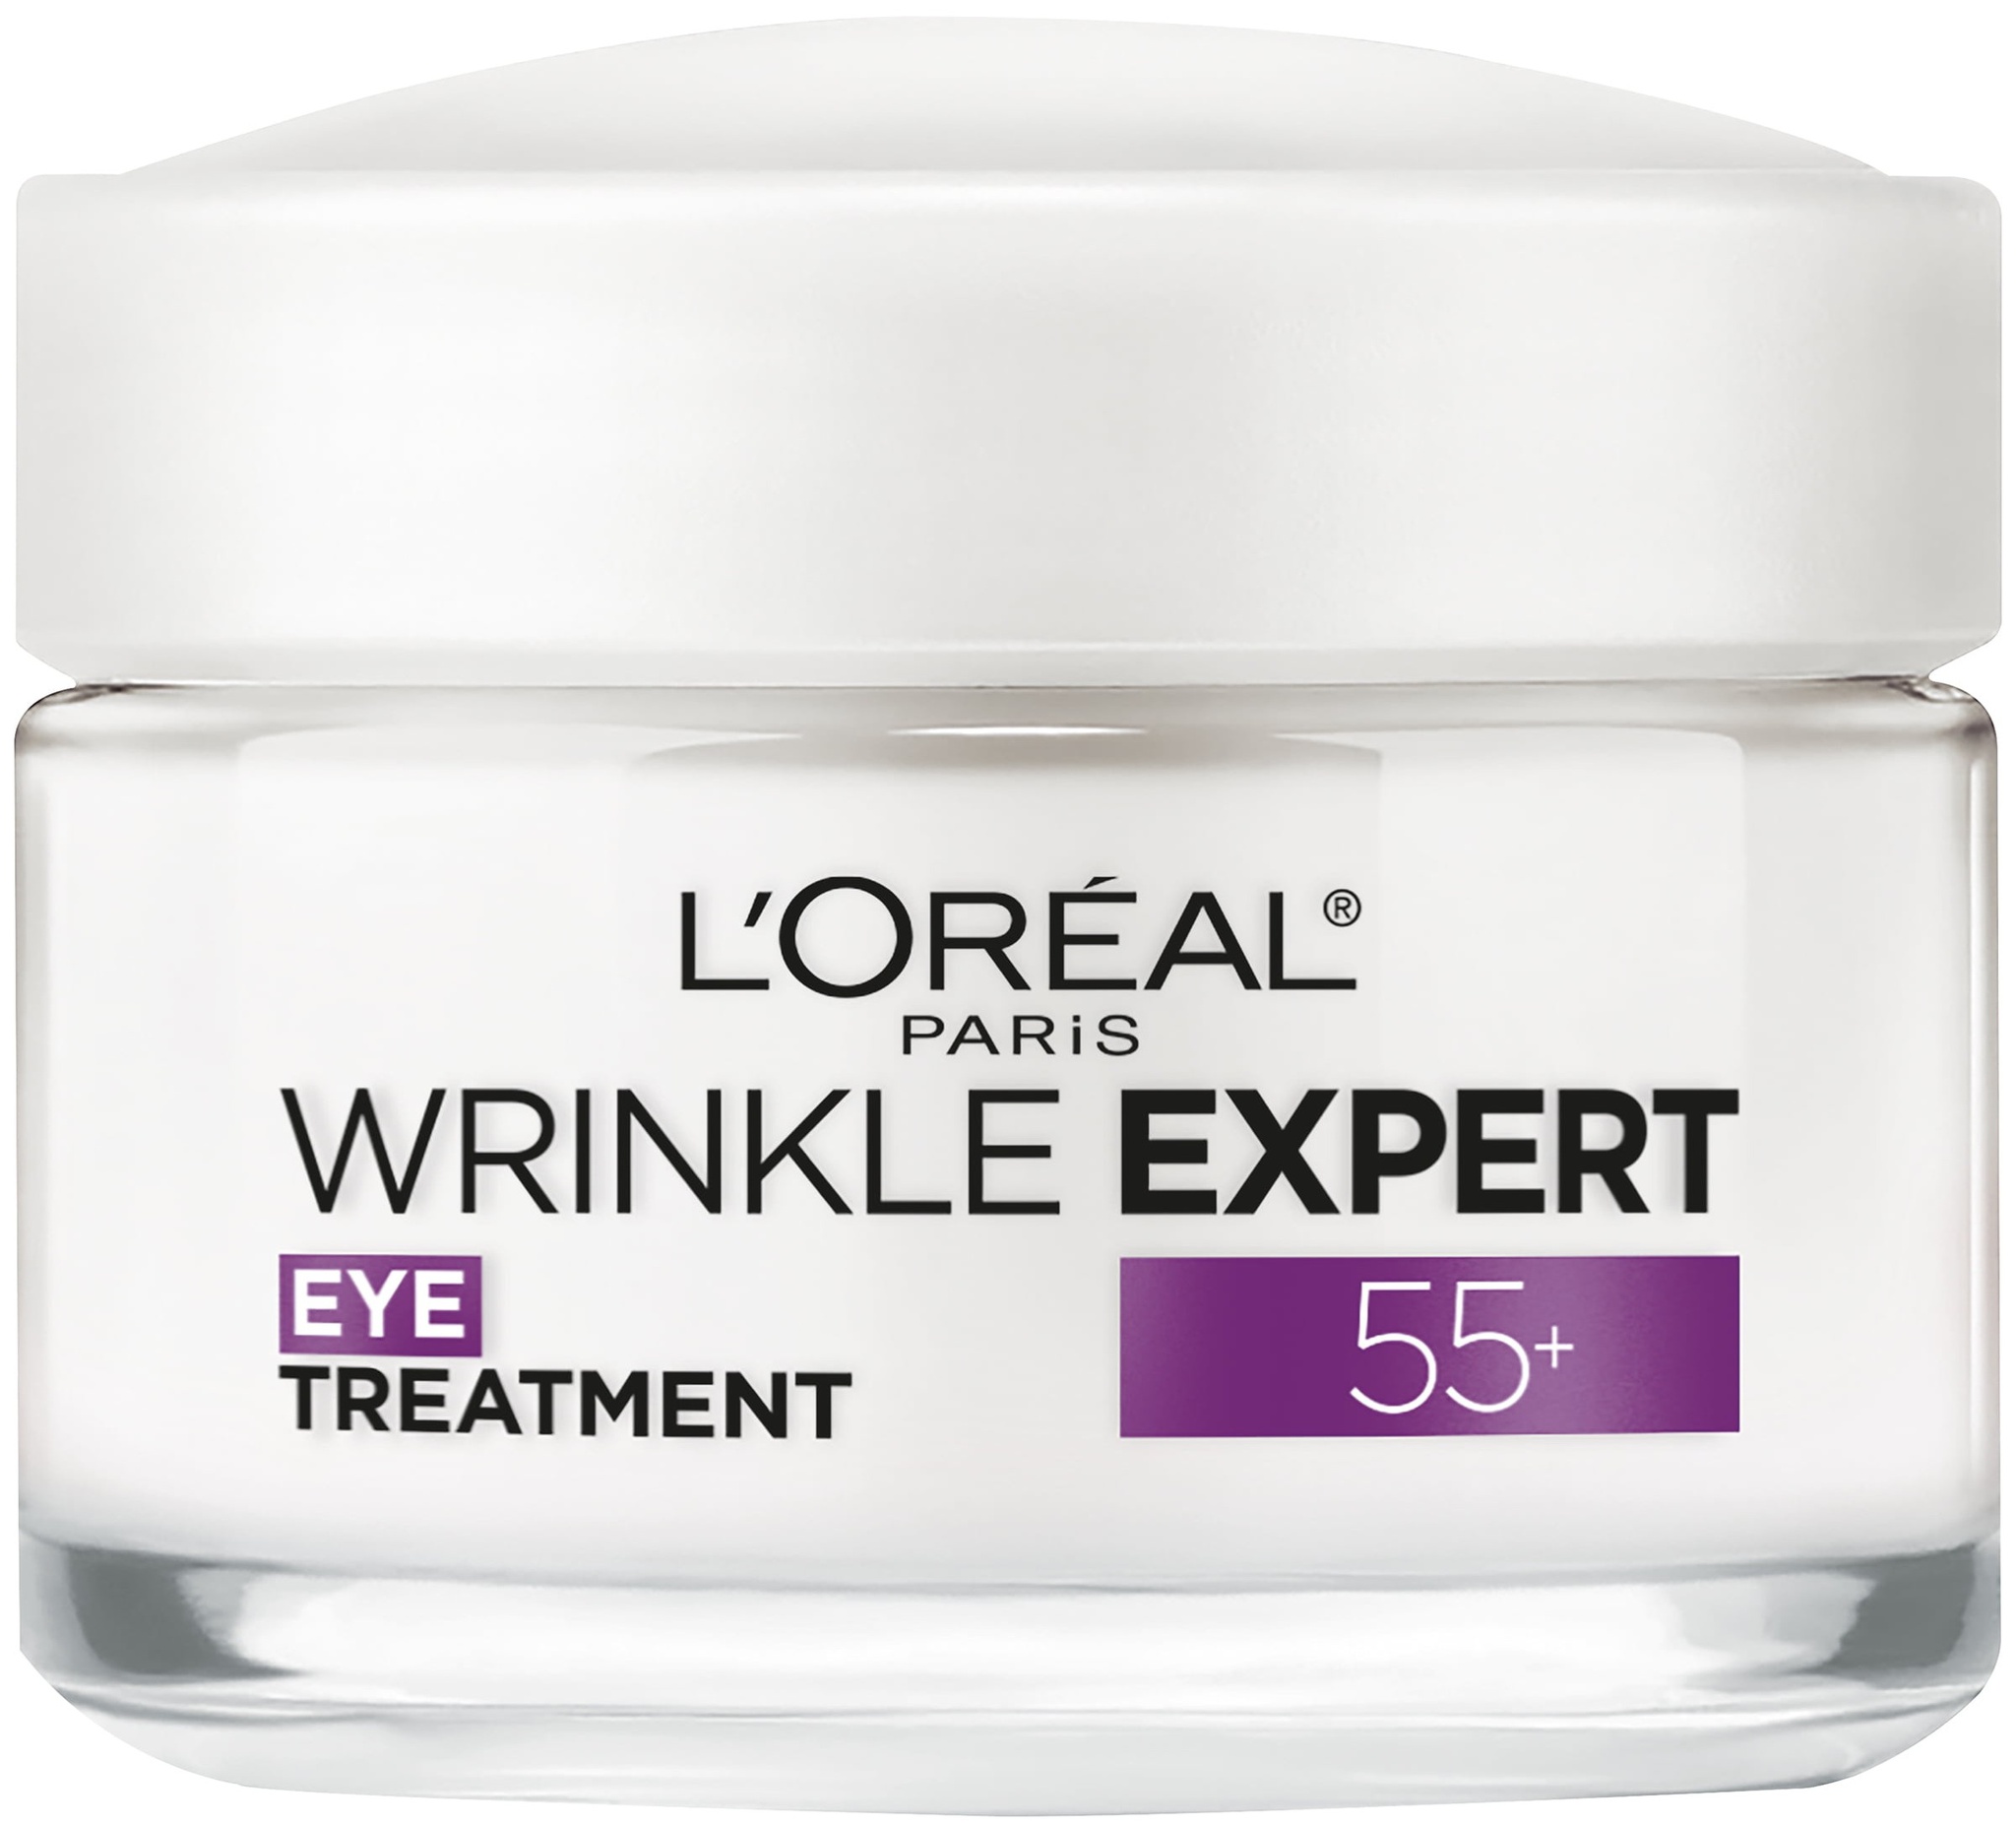 L'Oreal Paris Wrinkle Expert Eye Treatment Cream